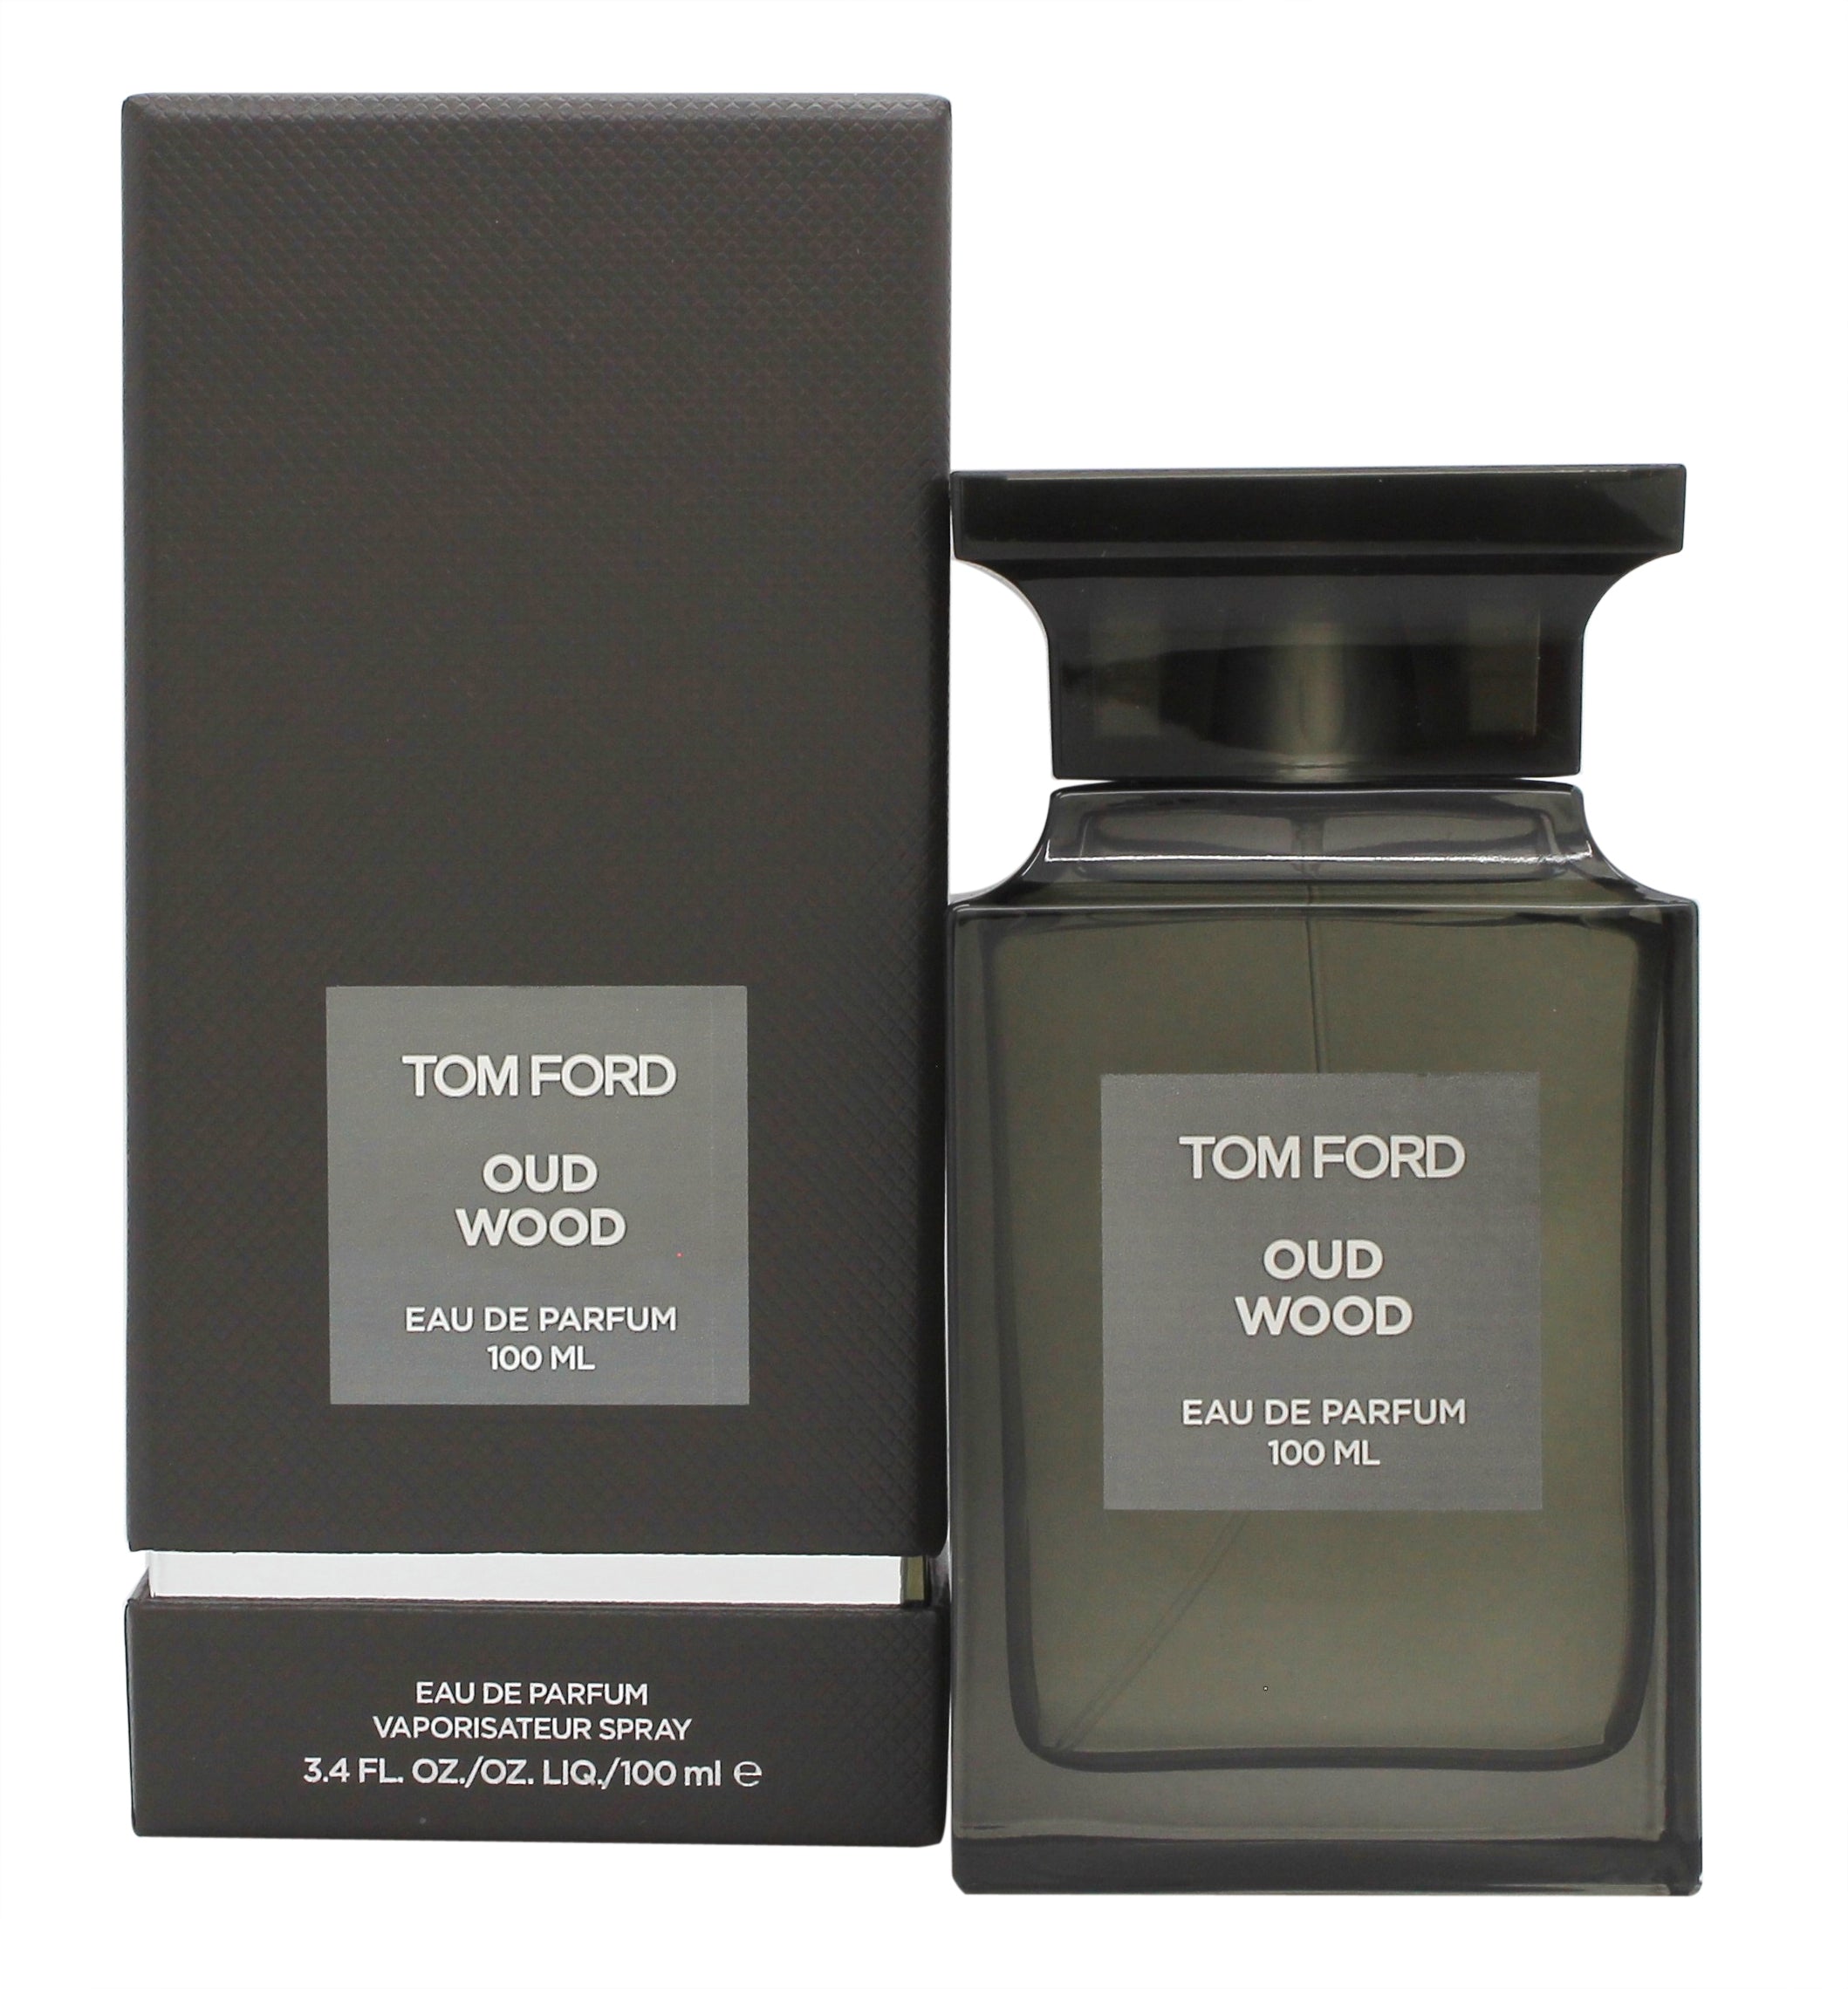 View Tom Ford Private Blend Oud Wood Eau de Parfum 100ml Spray information